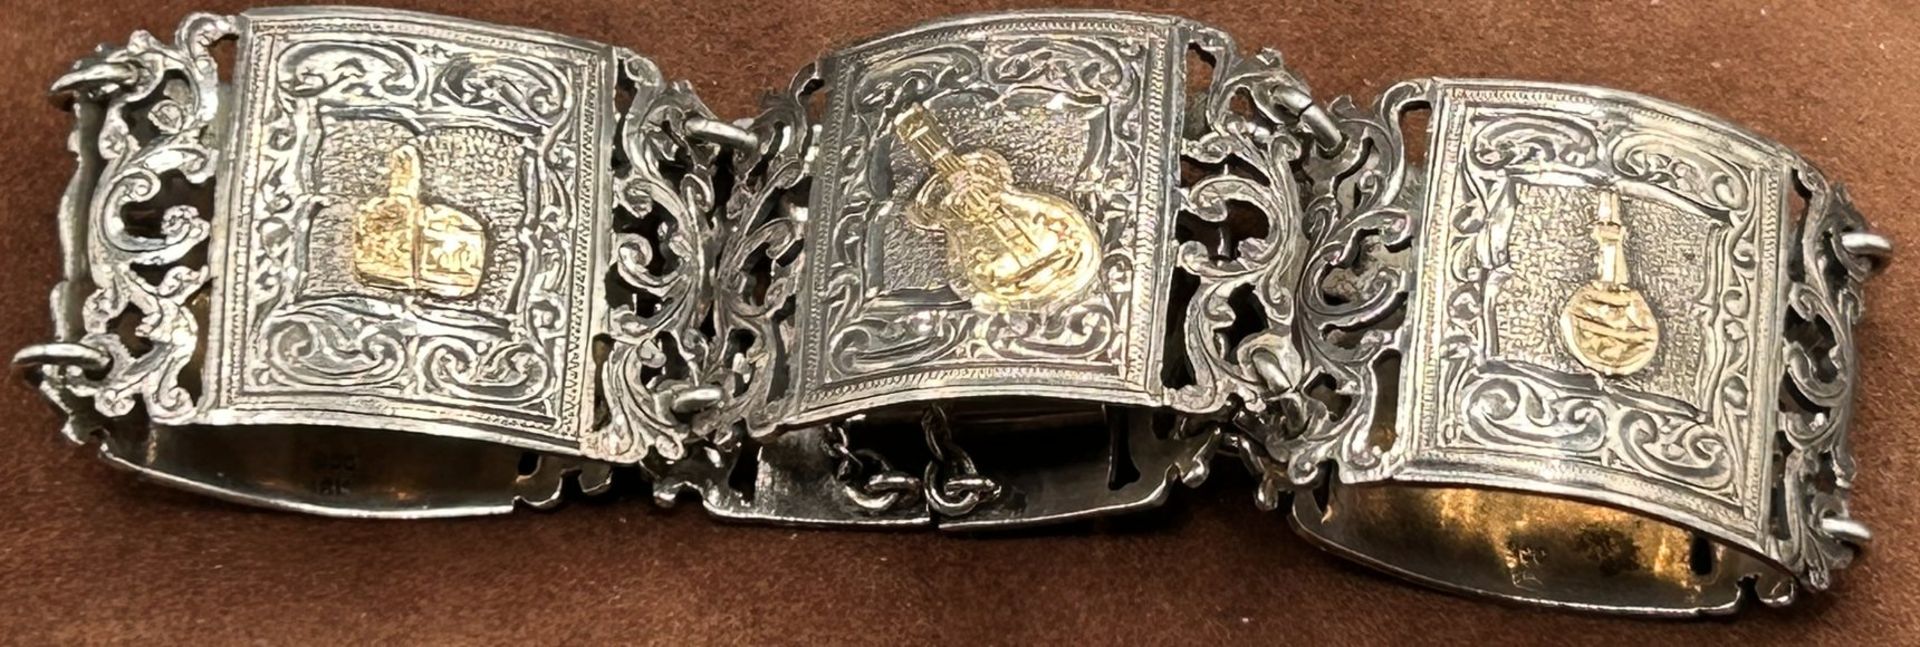 massives Silber-900- Armband mit 18 Kt. Goldapplikationen auf jedem Feld mitiig, 31,3 gr. - Image 3 of 4